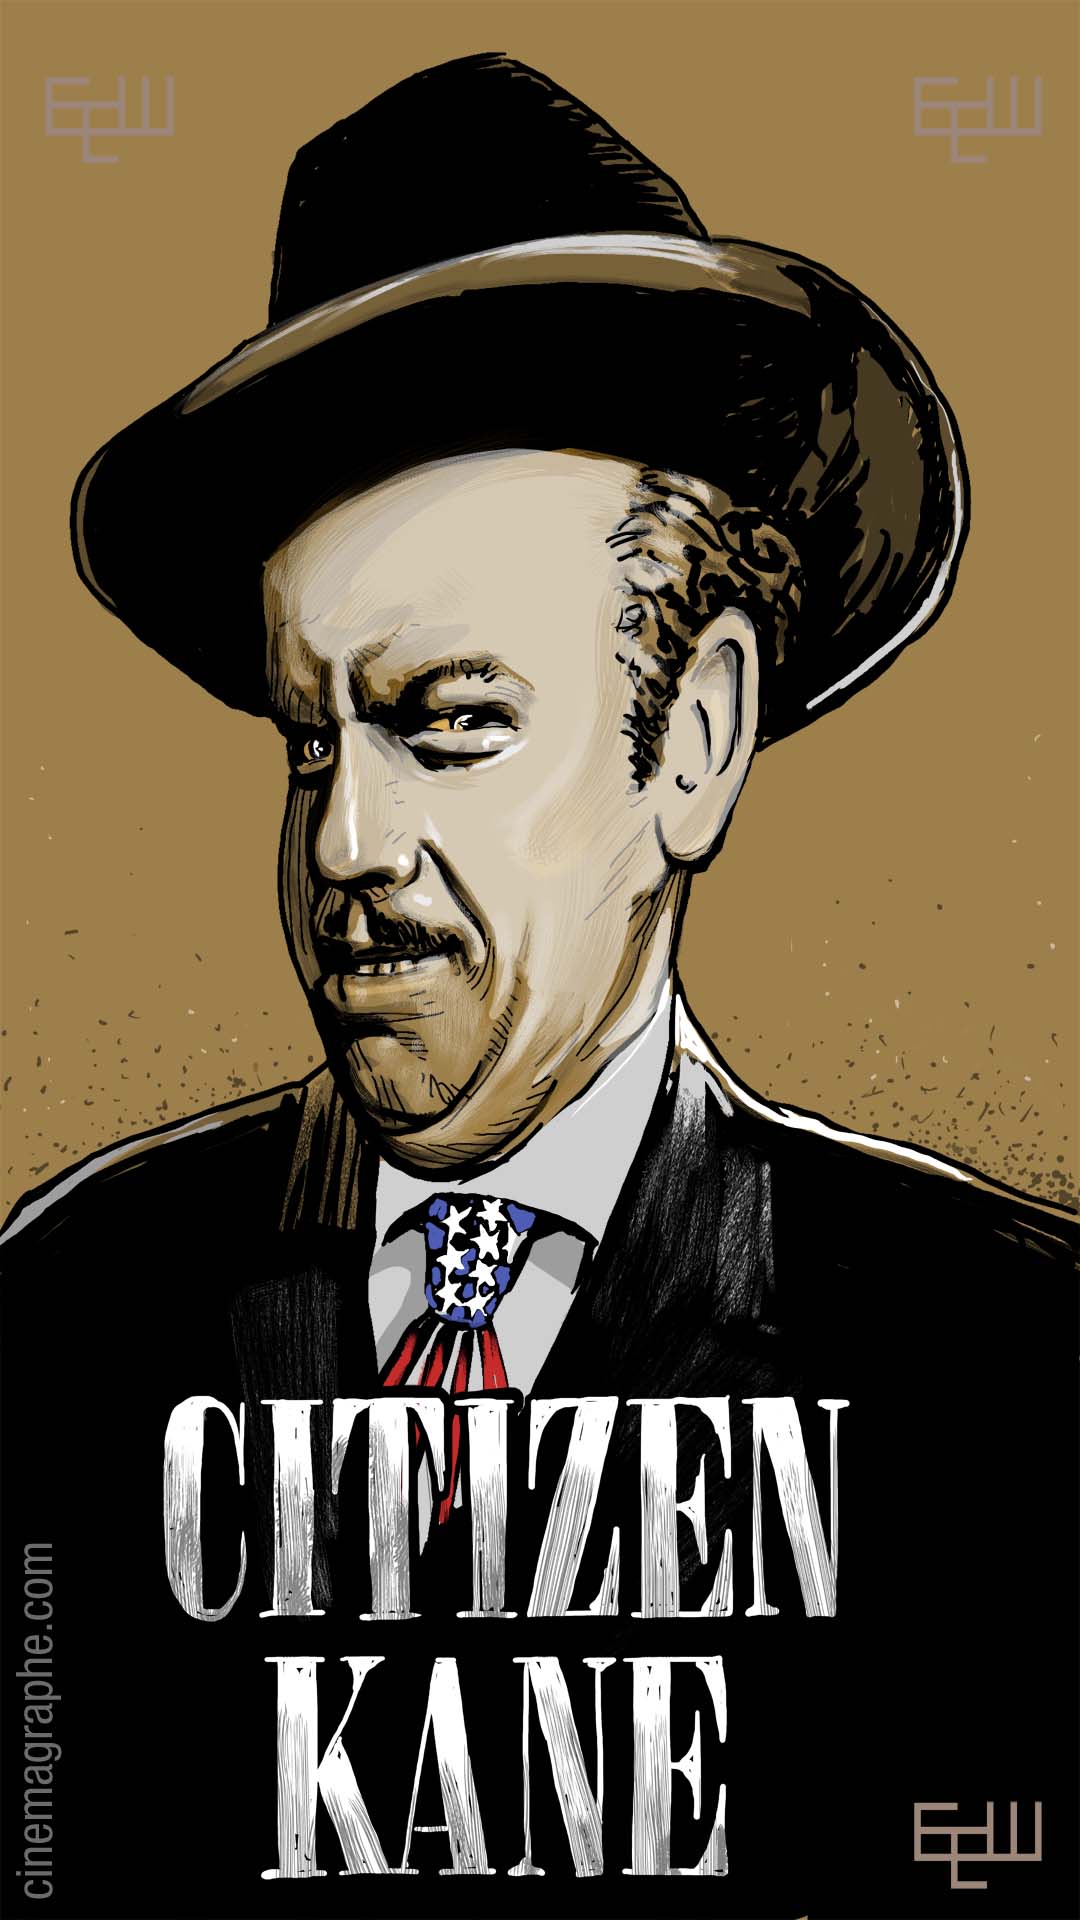 Citizen Kane starring Orson Welles